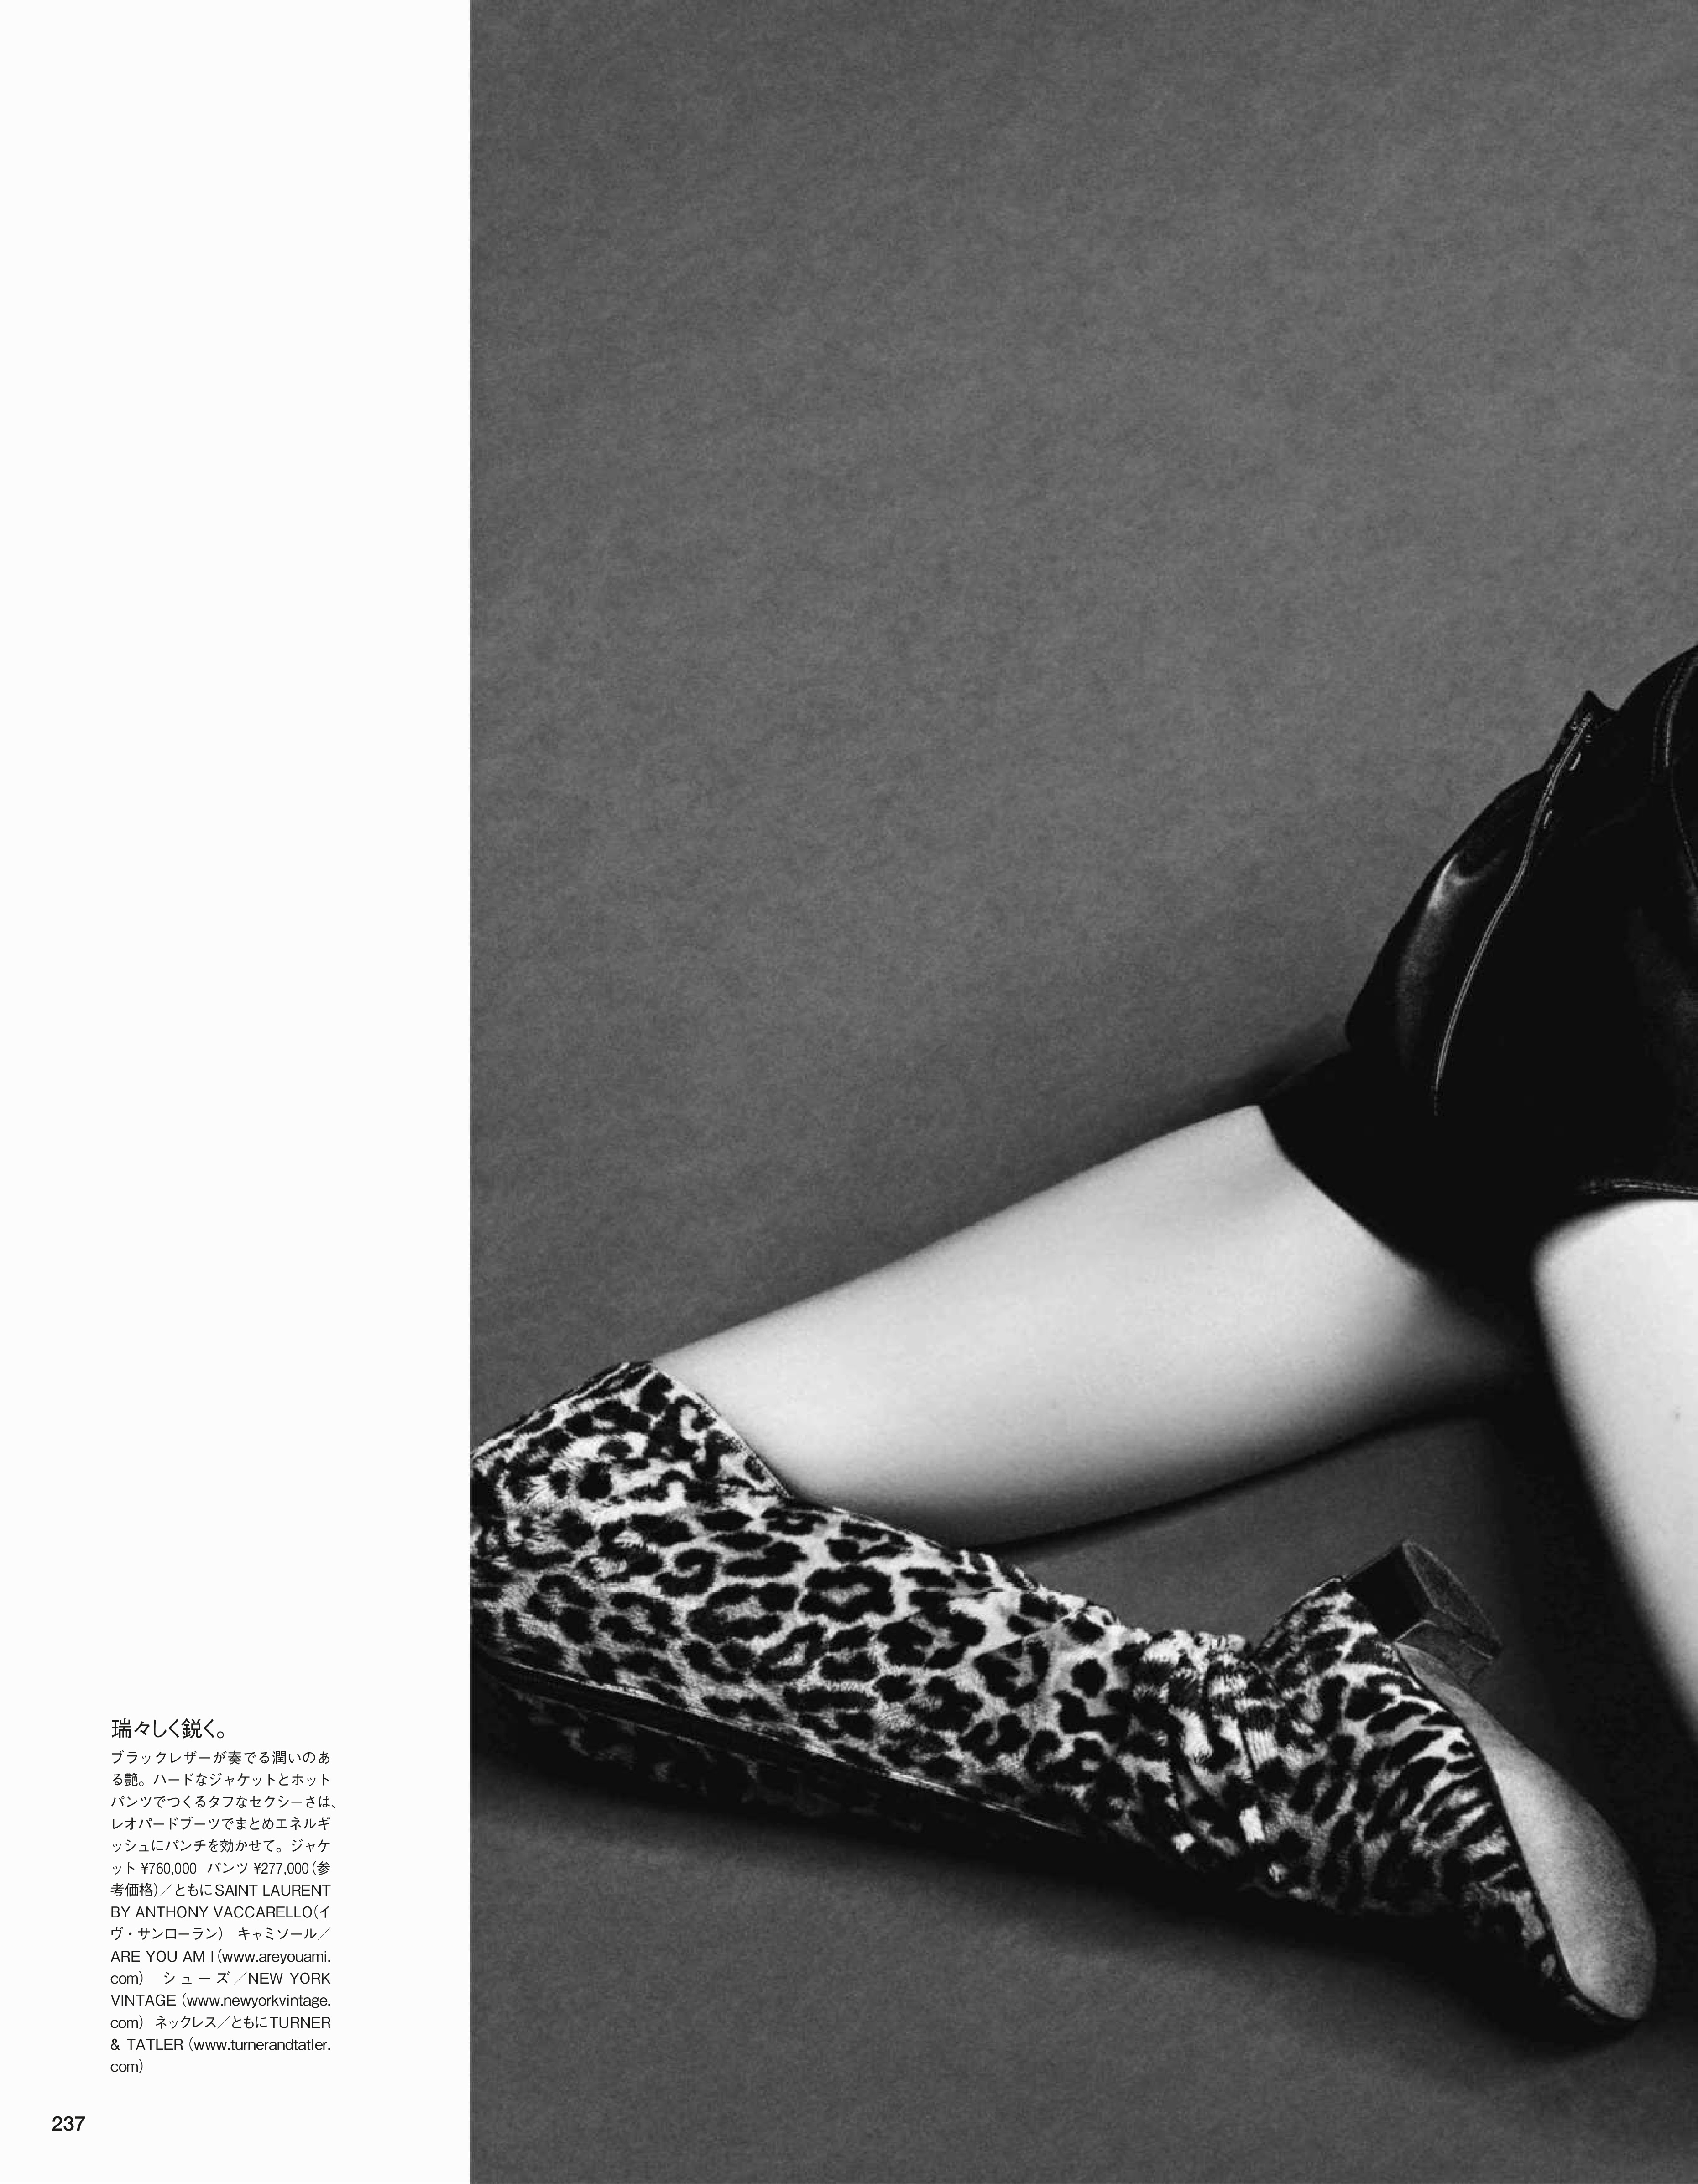 Kaia Gerber for Vogue Japan Magazine (December 2018)